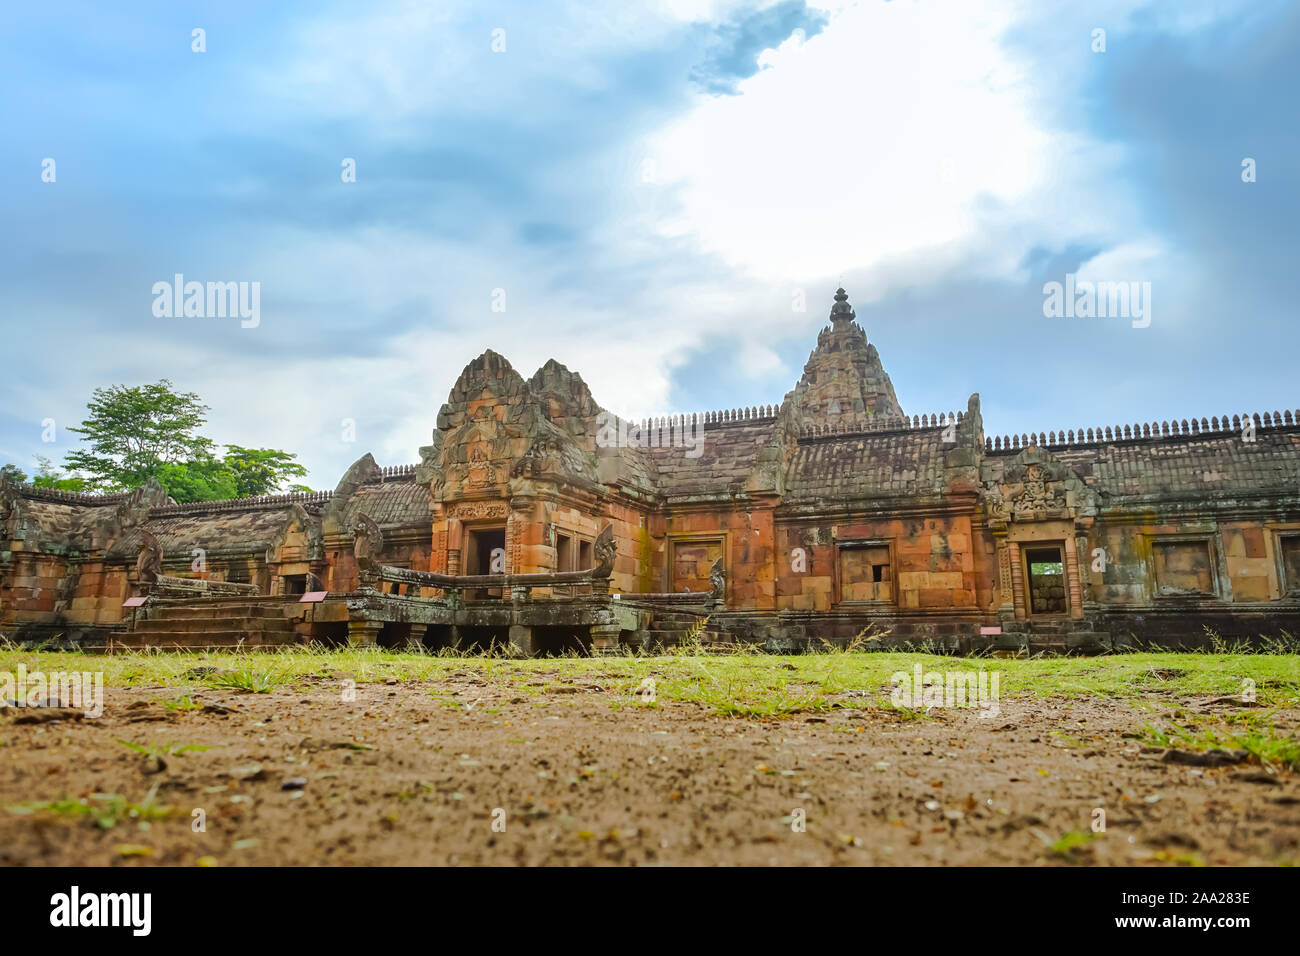 The Khmer temple Prasat Hin Phanom Rung (Phanom Rung Stone Castle) in Chaloem Phrakiat District, Buriram Province, Thailand. Stock Photo